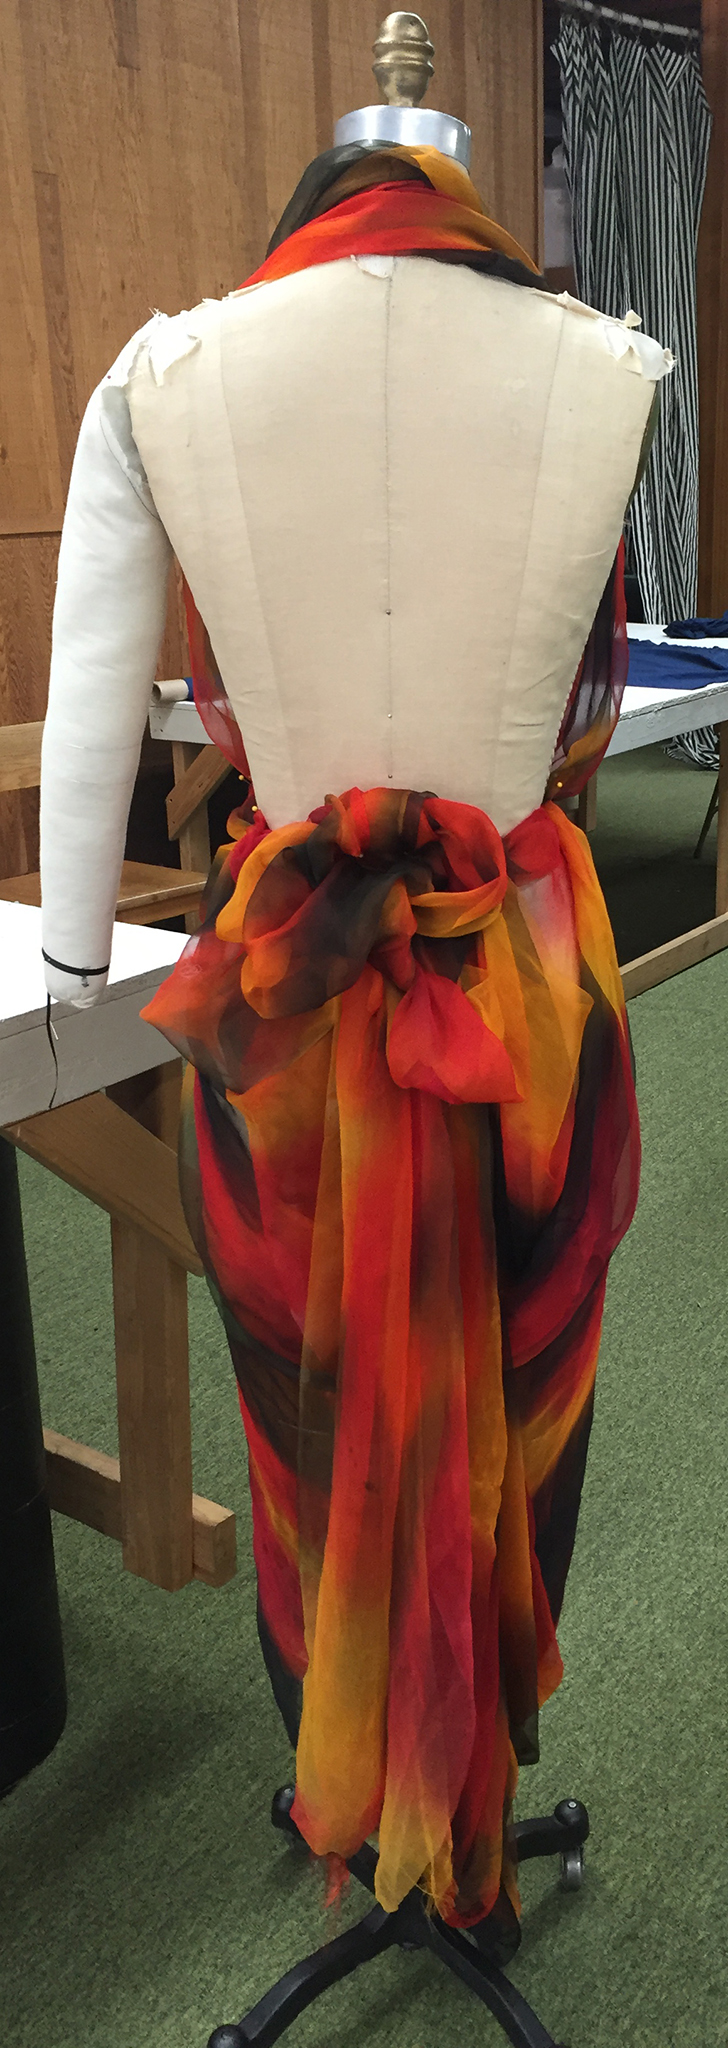 Multicolor silk chiffon draped over a dress form.